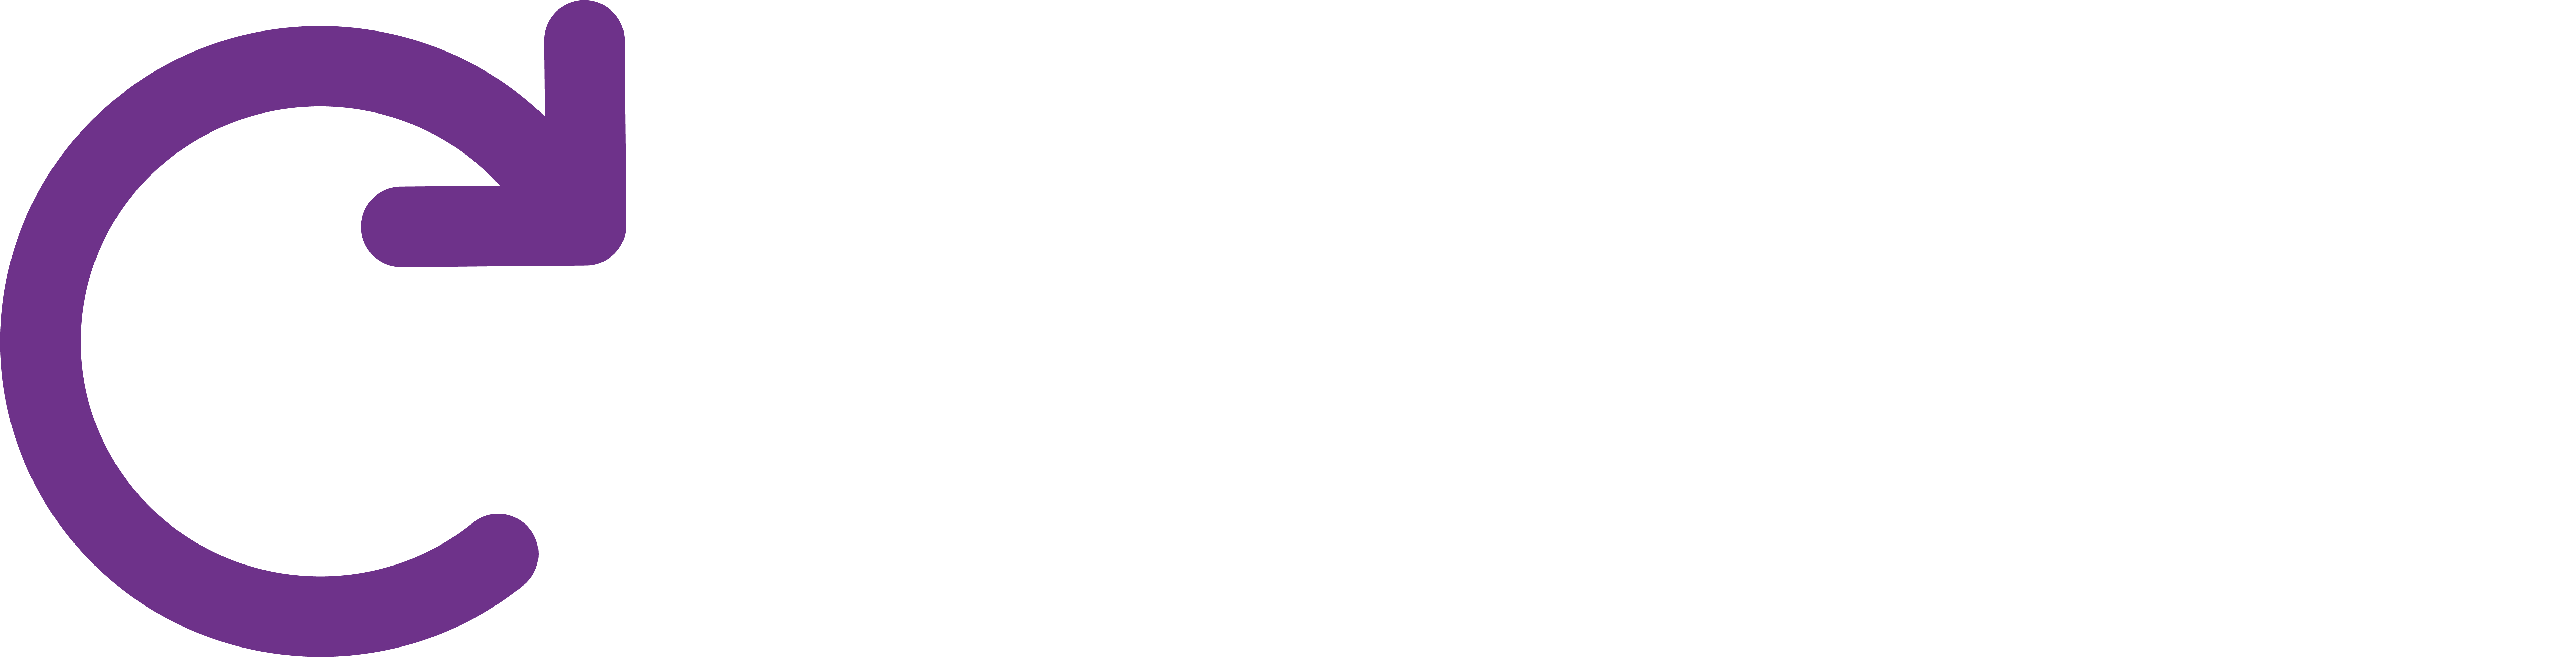 Whiterock Finance - Commercial Finance